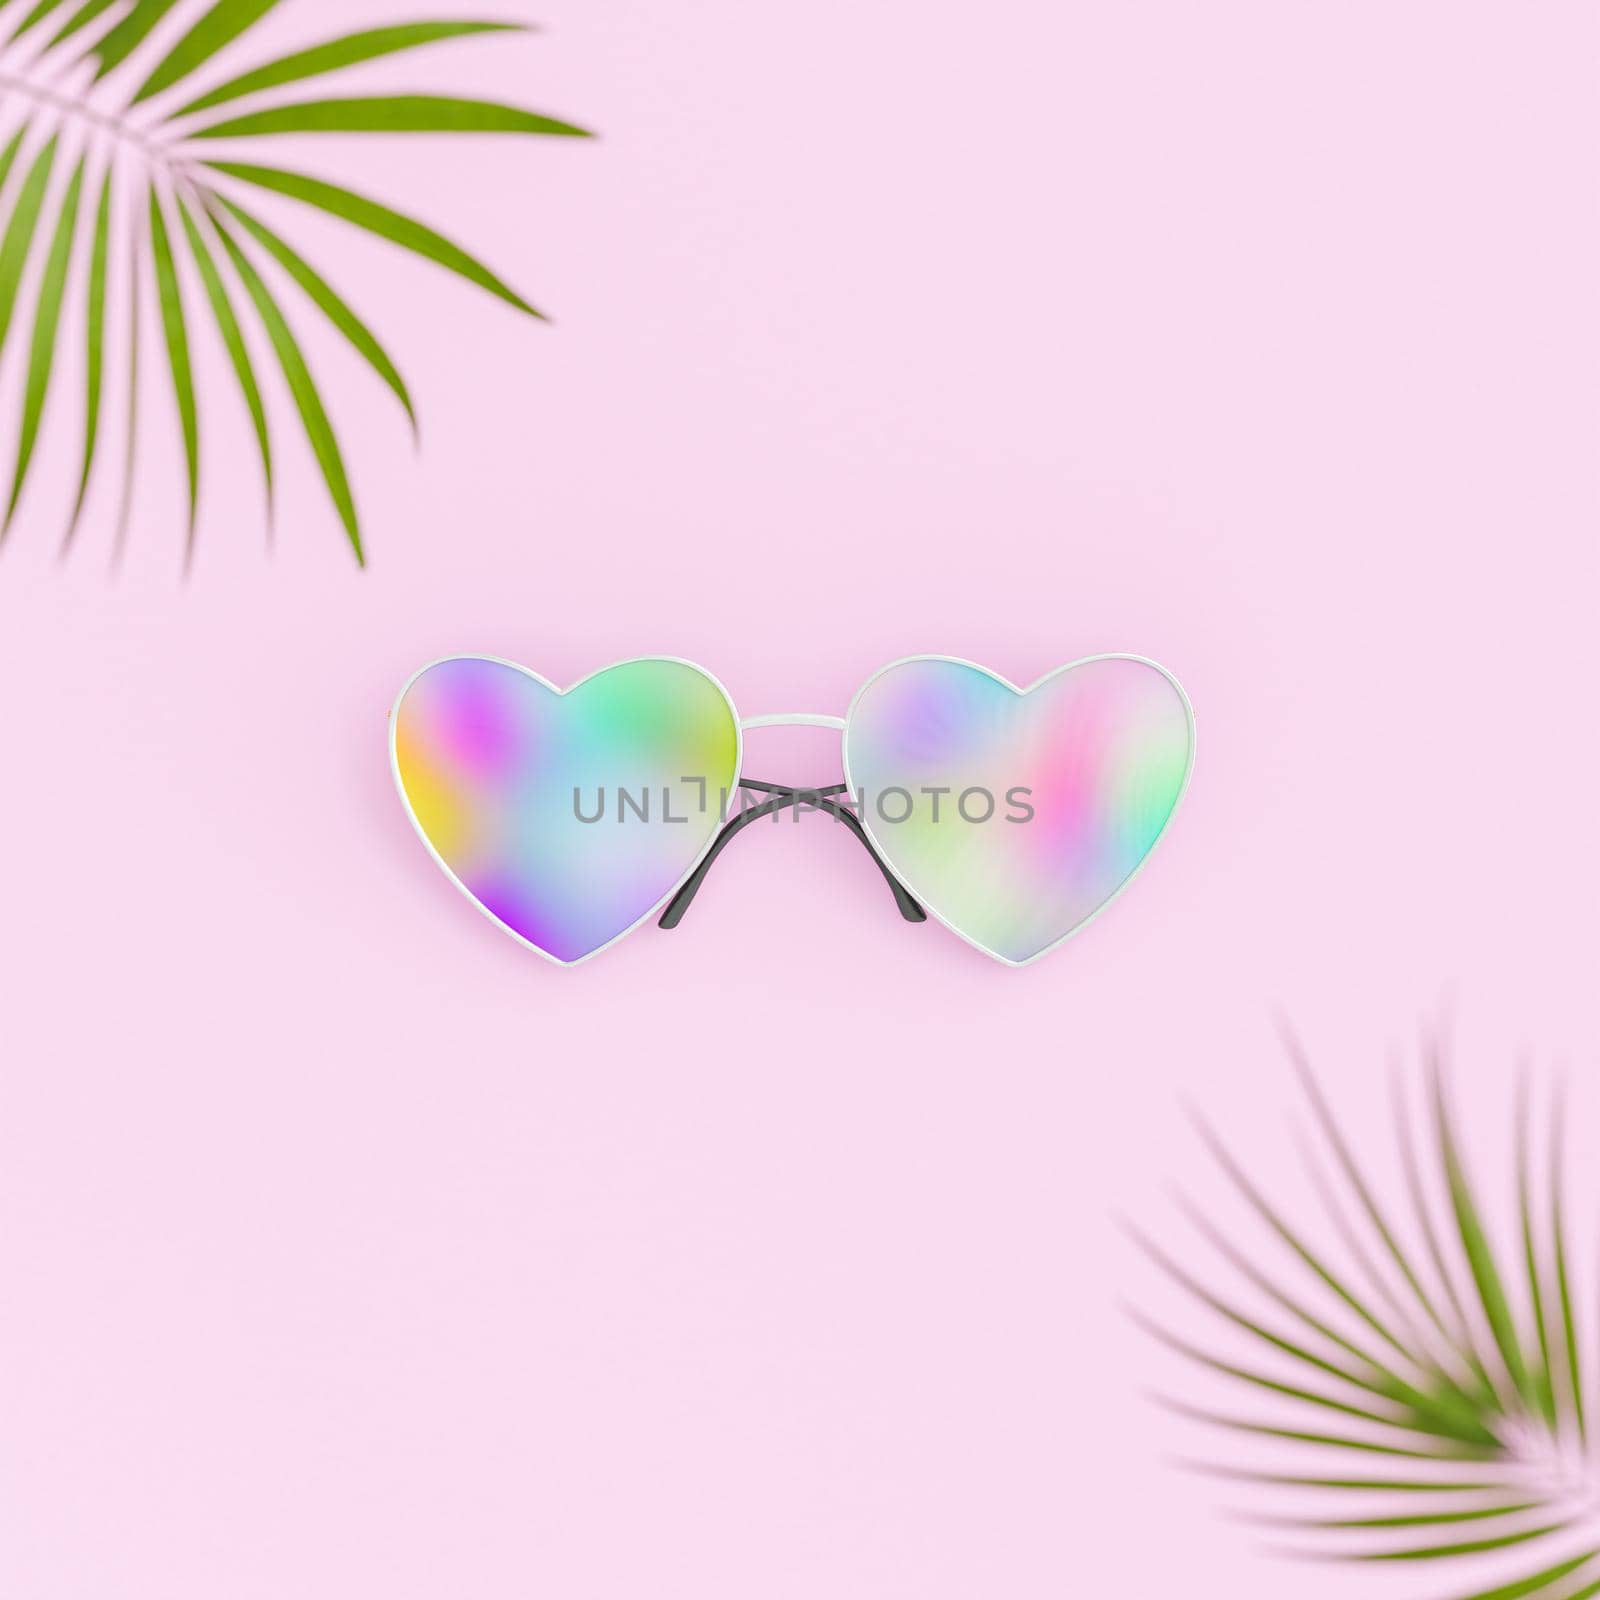 Stylish heart shaped sunglasses on pink background by asolano